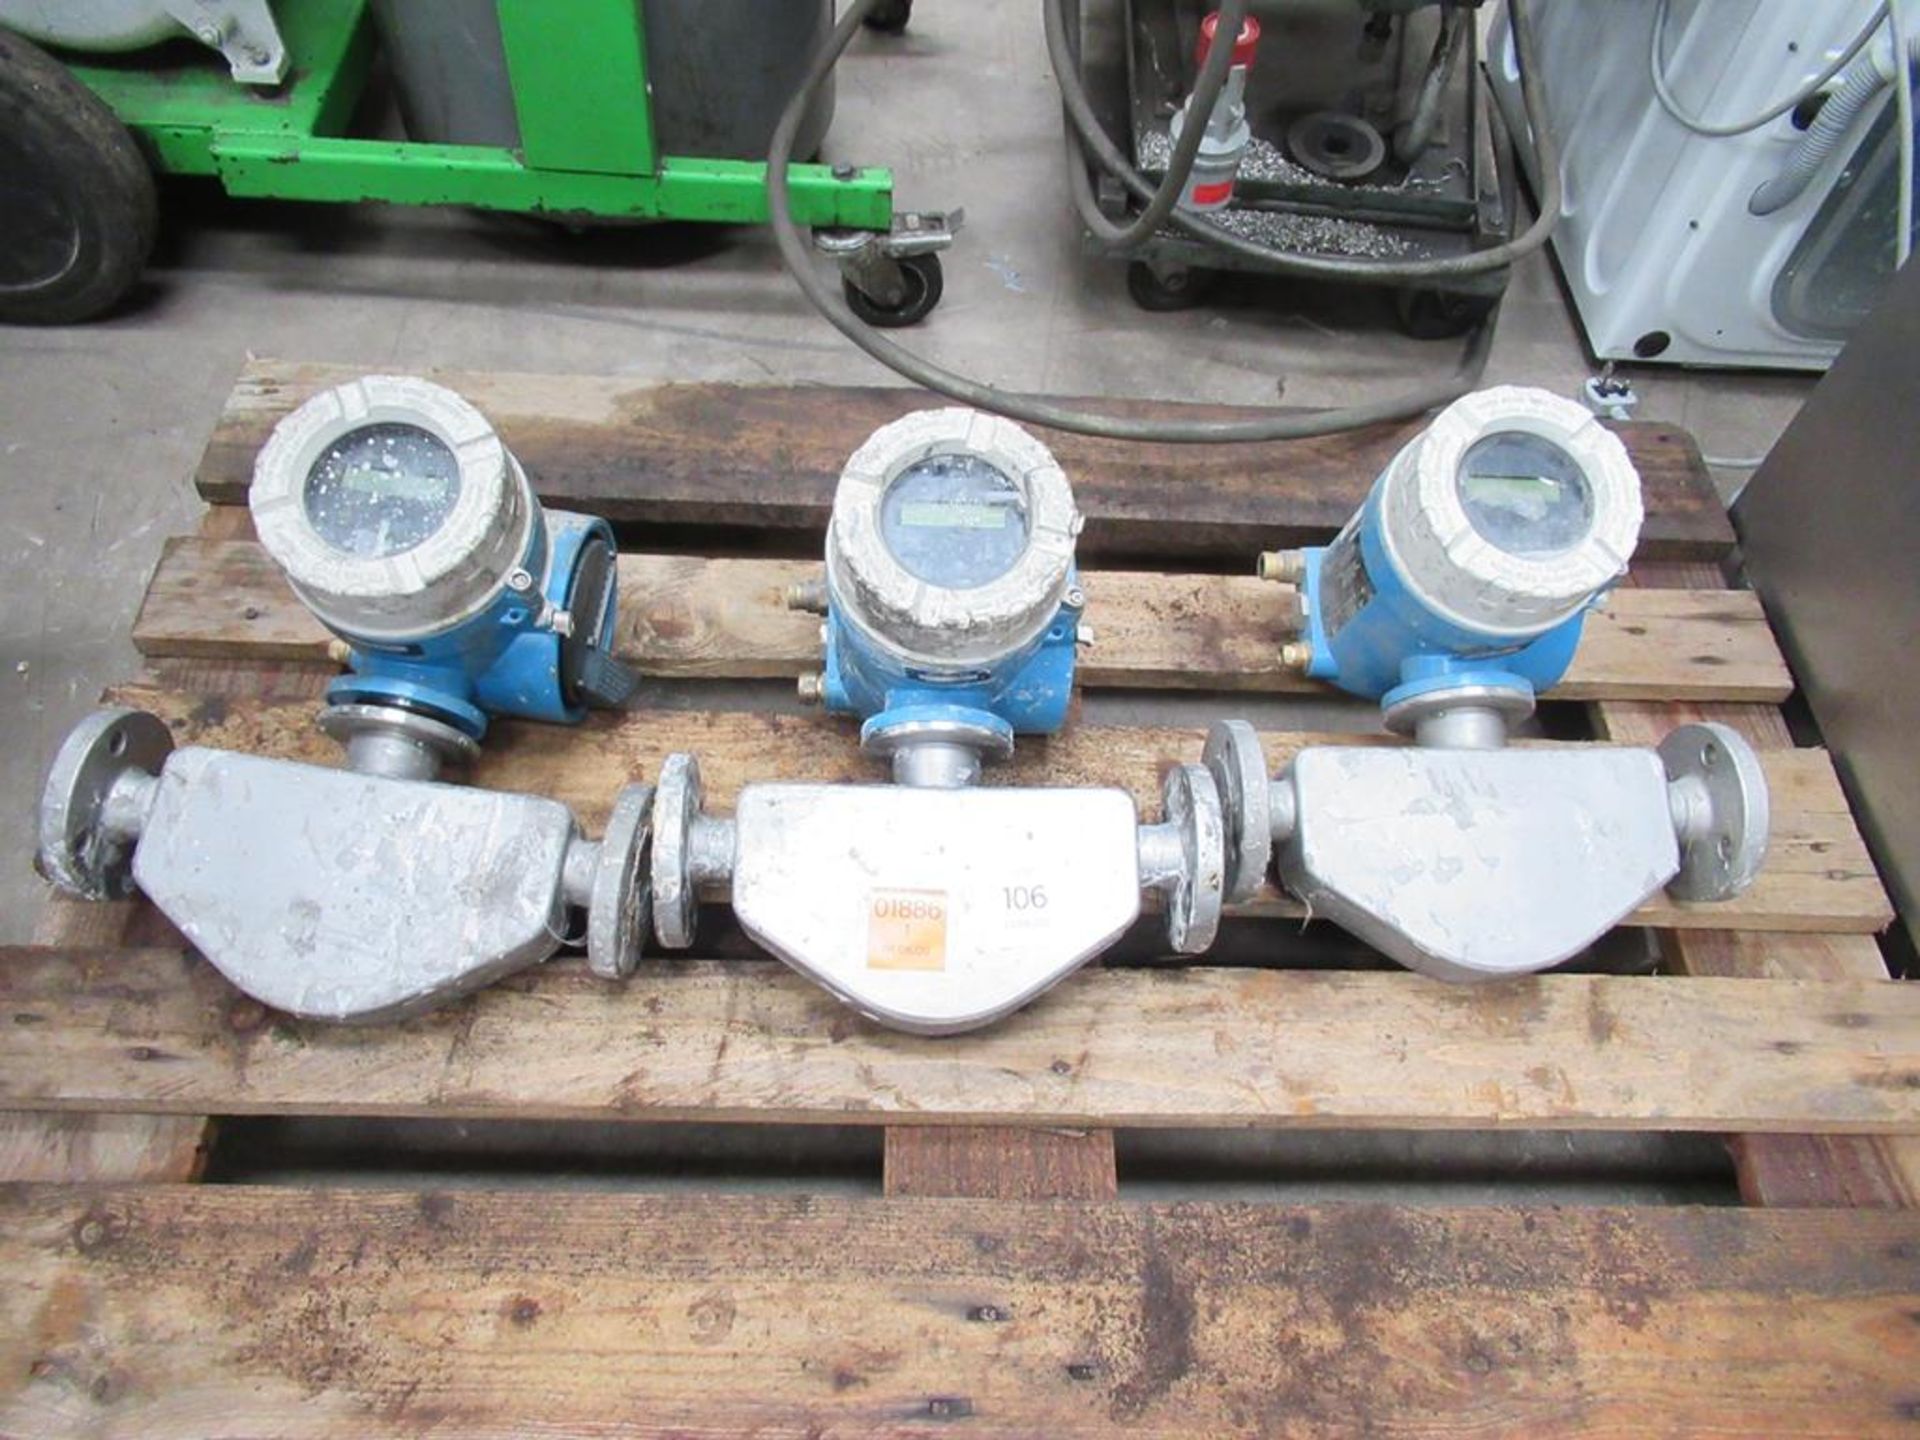 3 x Endress & Hauser flowmeter pumps